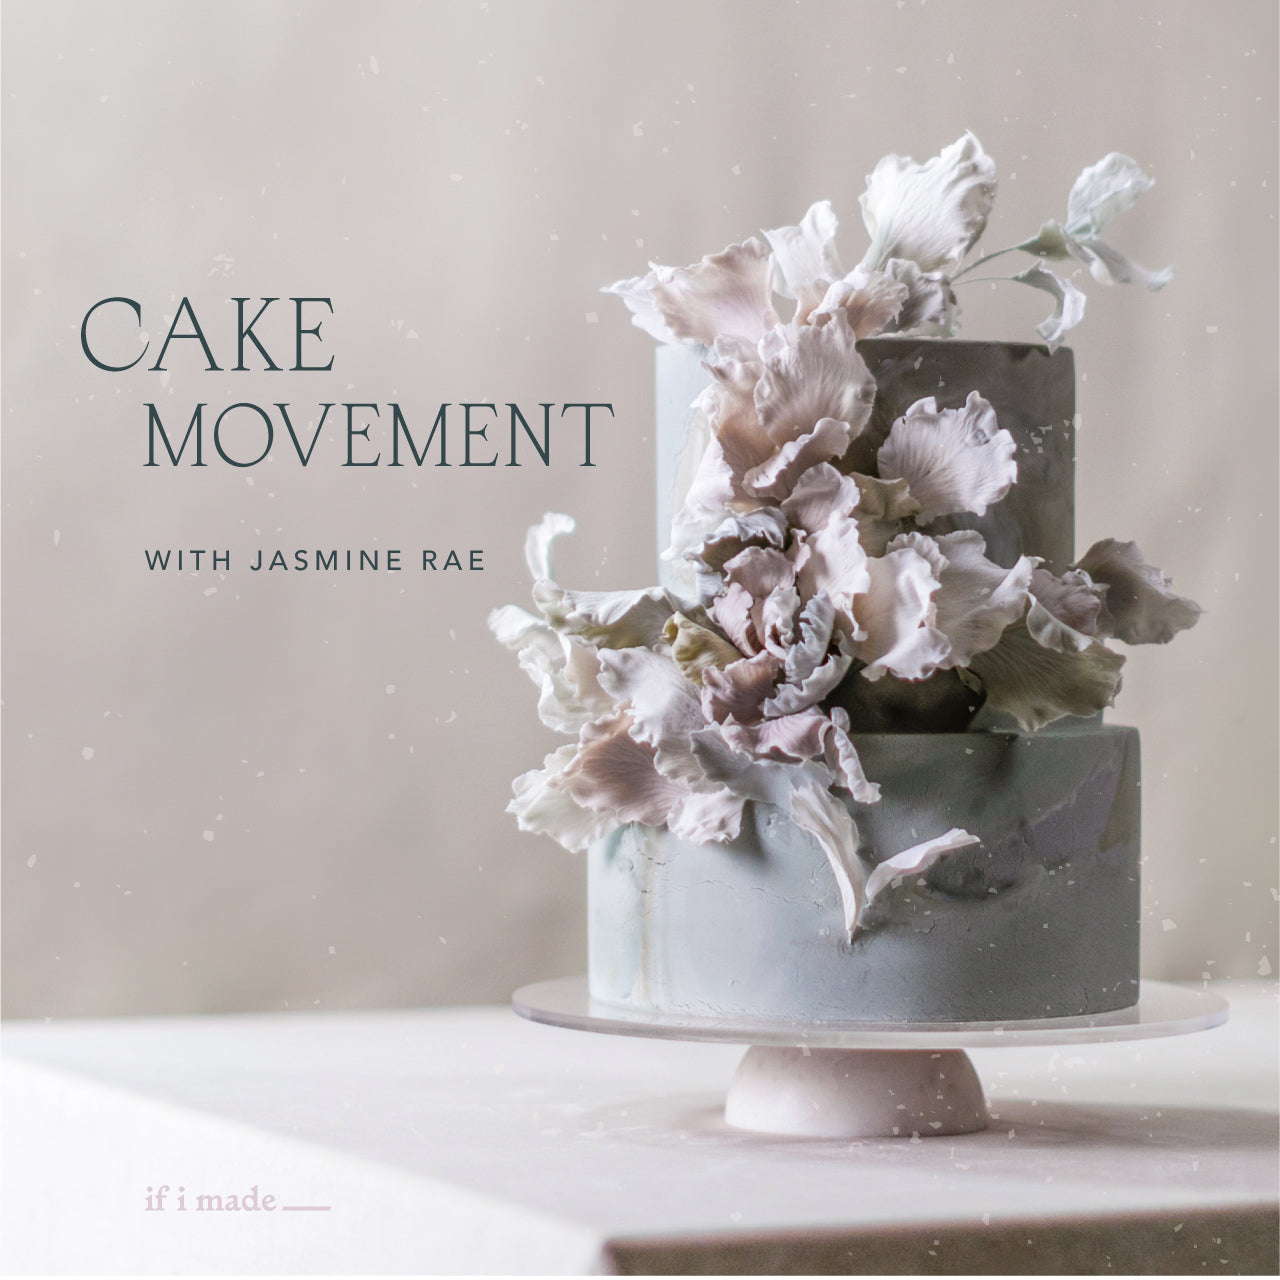 Cake Movement with Jasmine Rae (ROP)